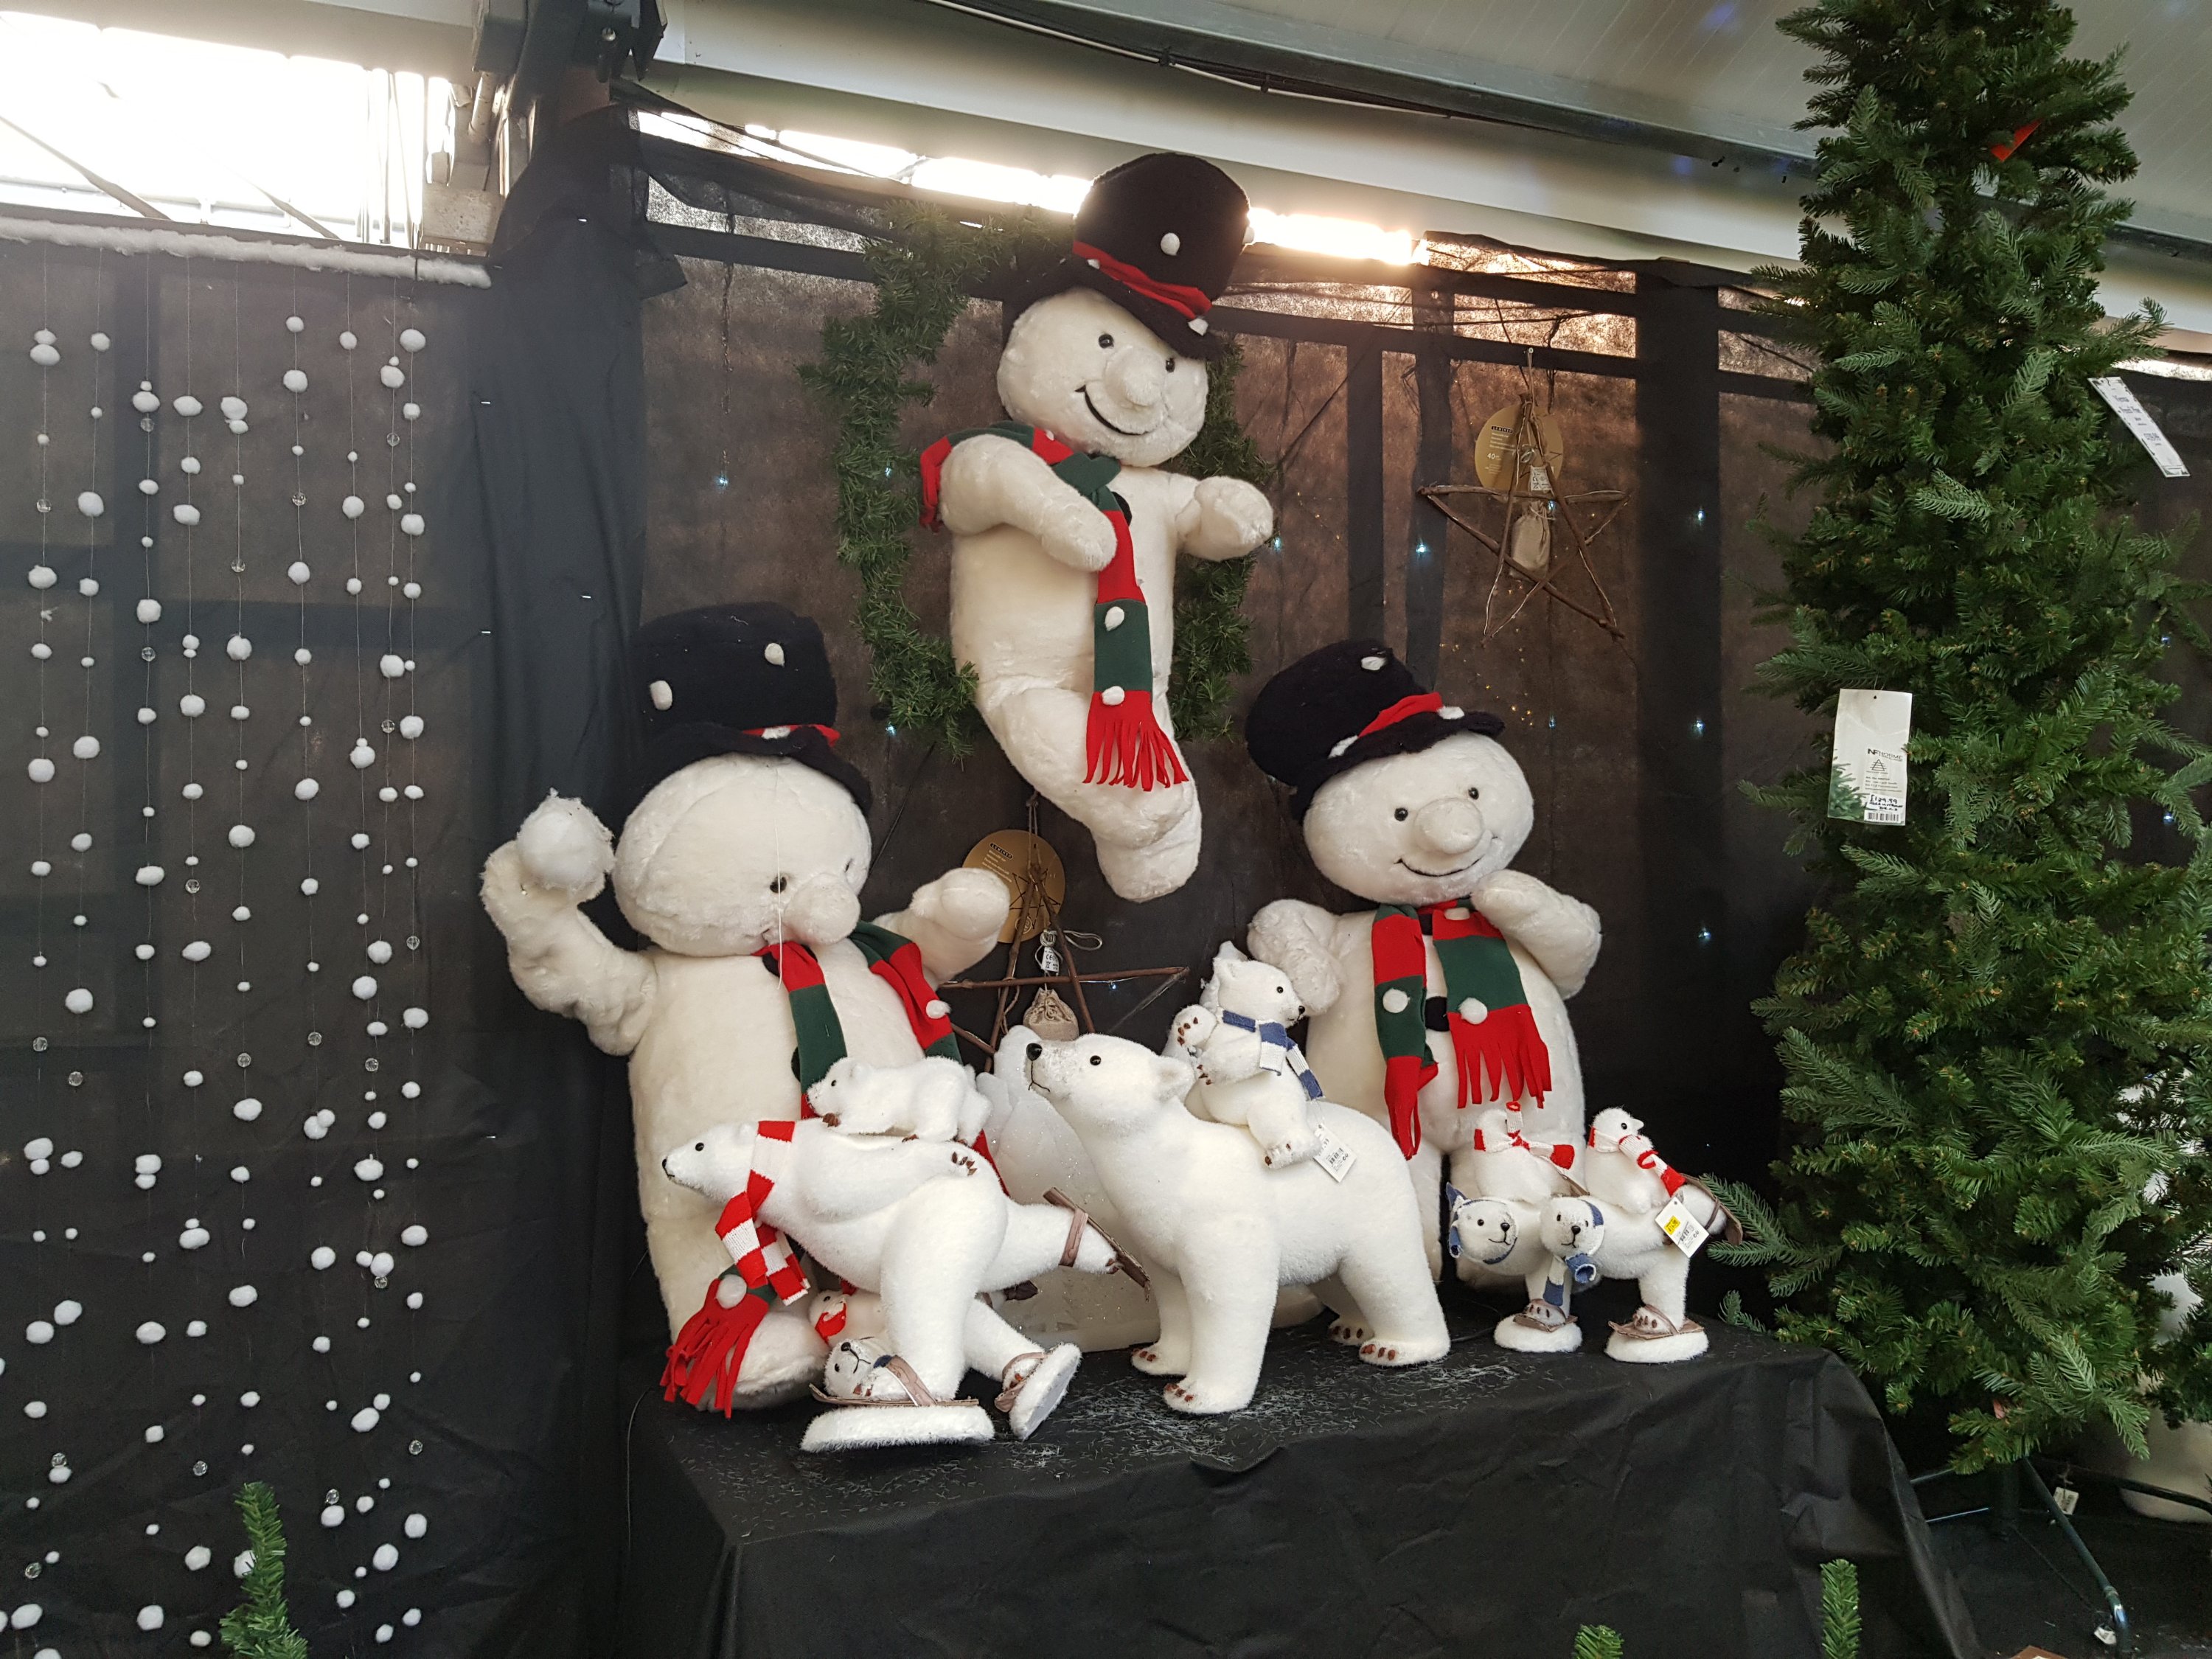 Vanstone Park garden centre snowman festive Christmas display